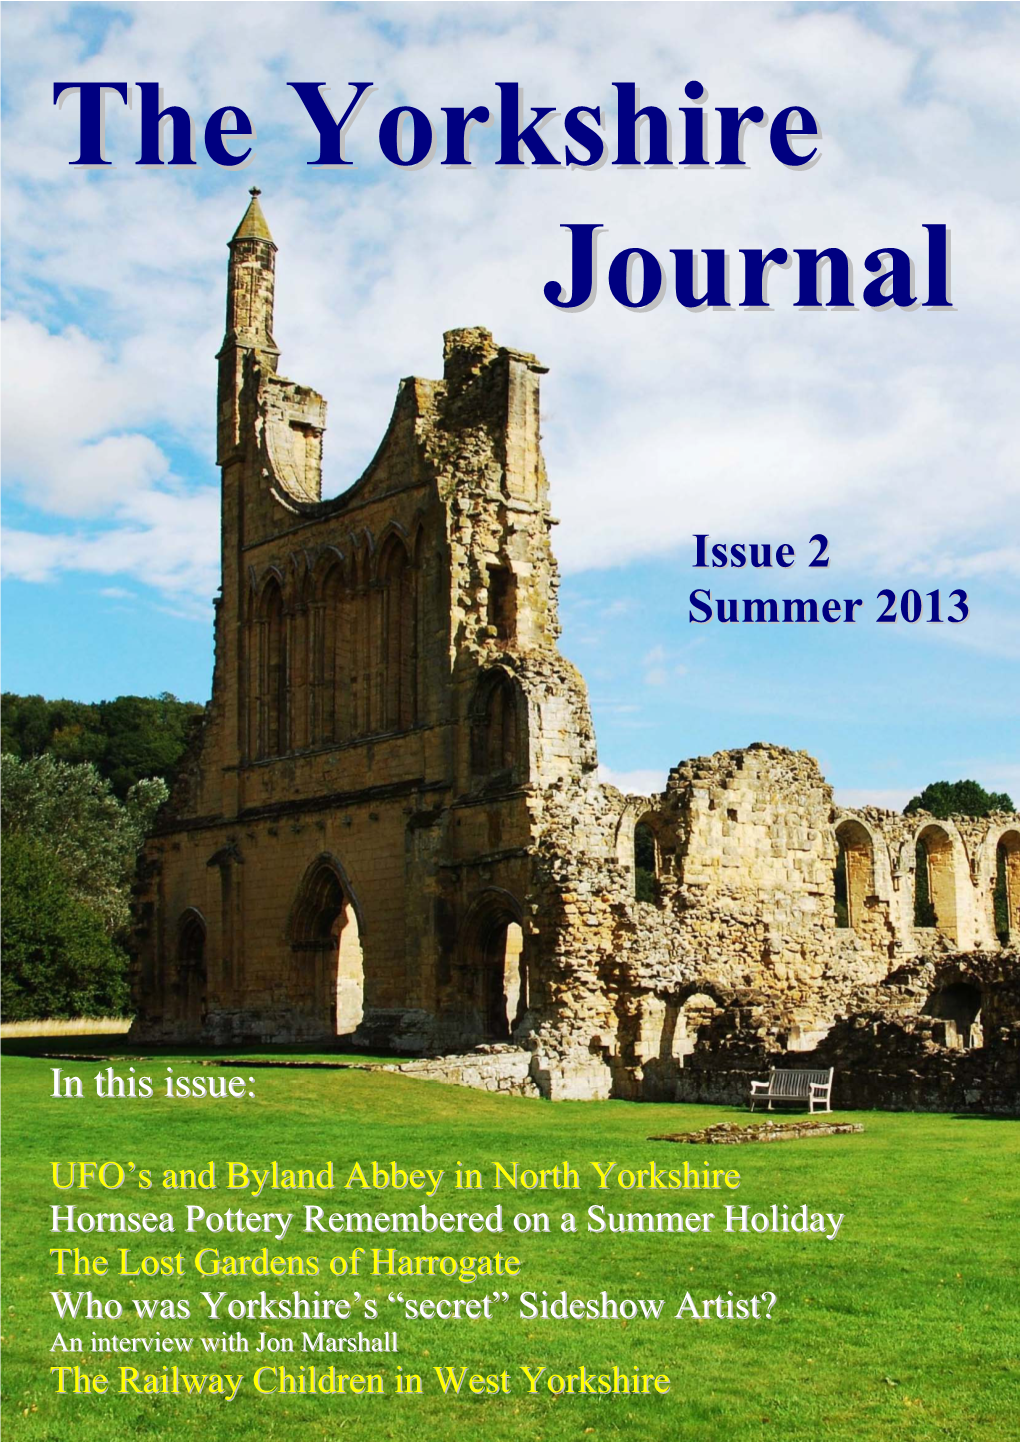 Issue 2 Summer 2013